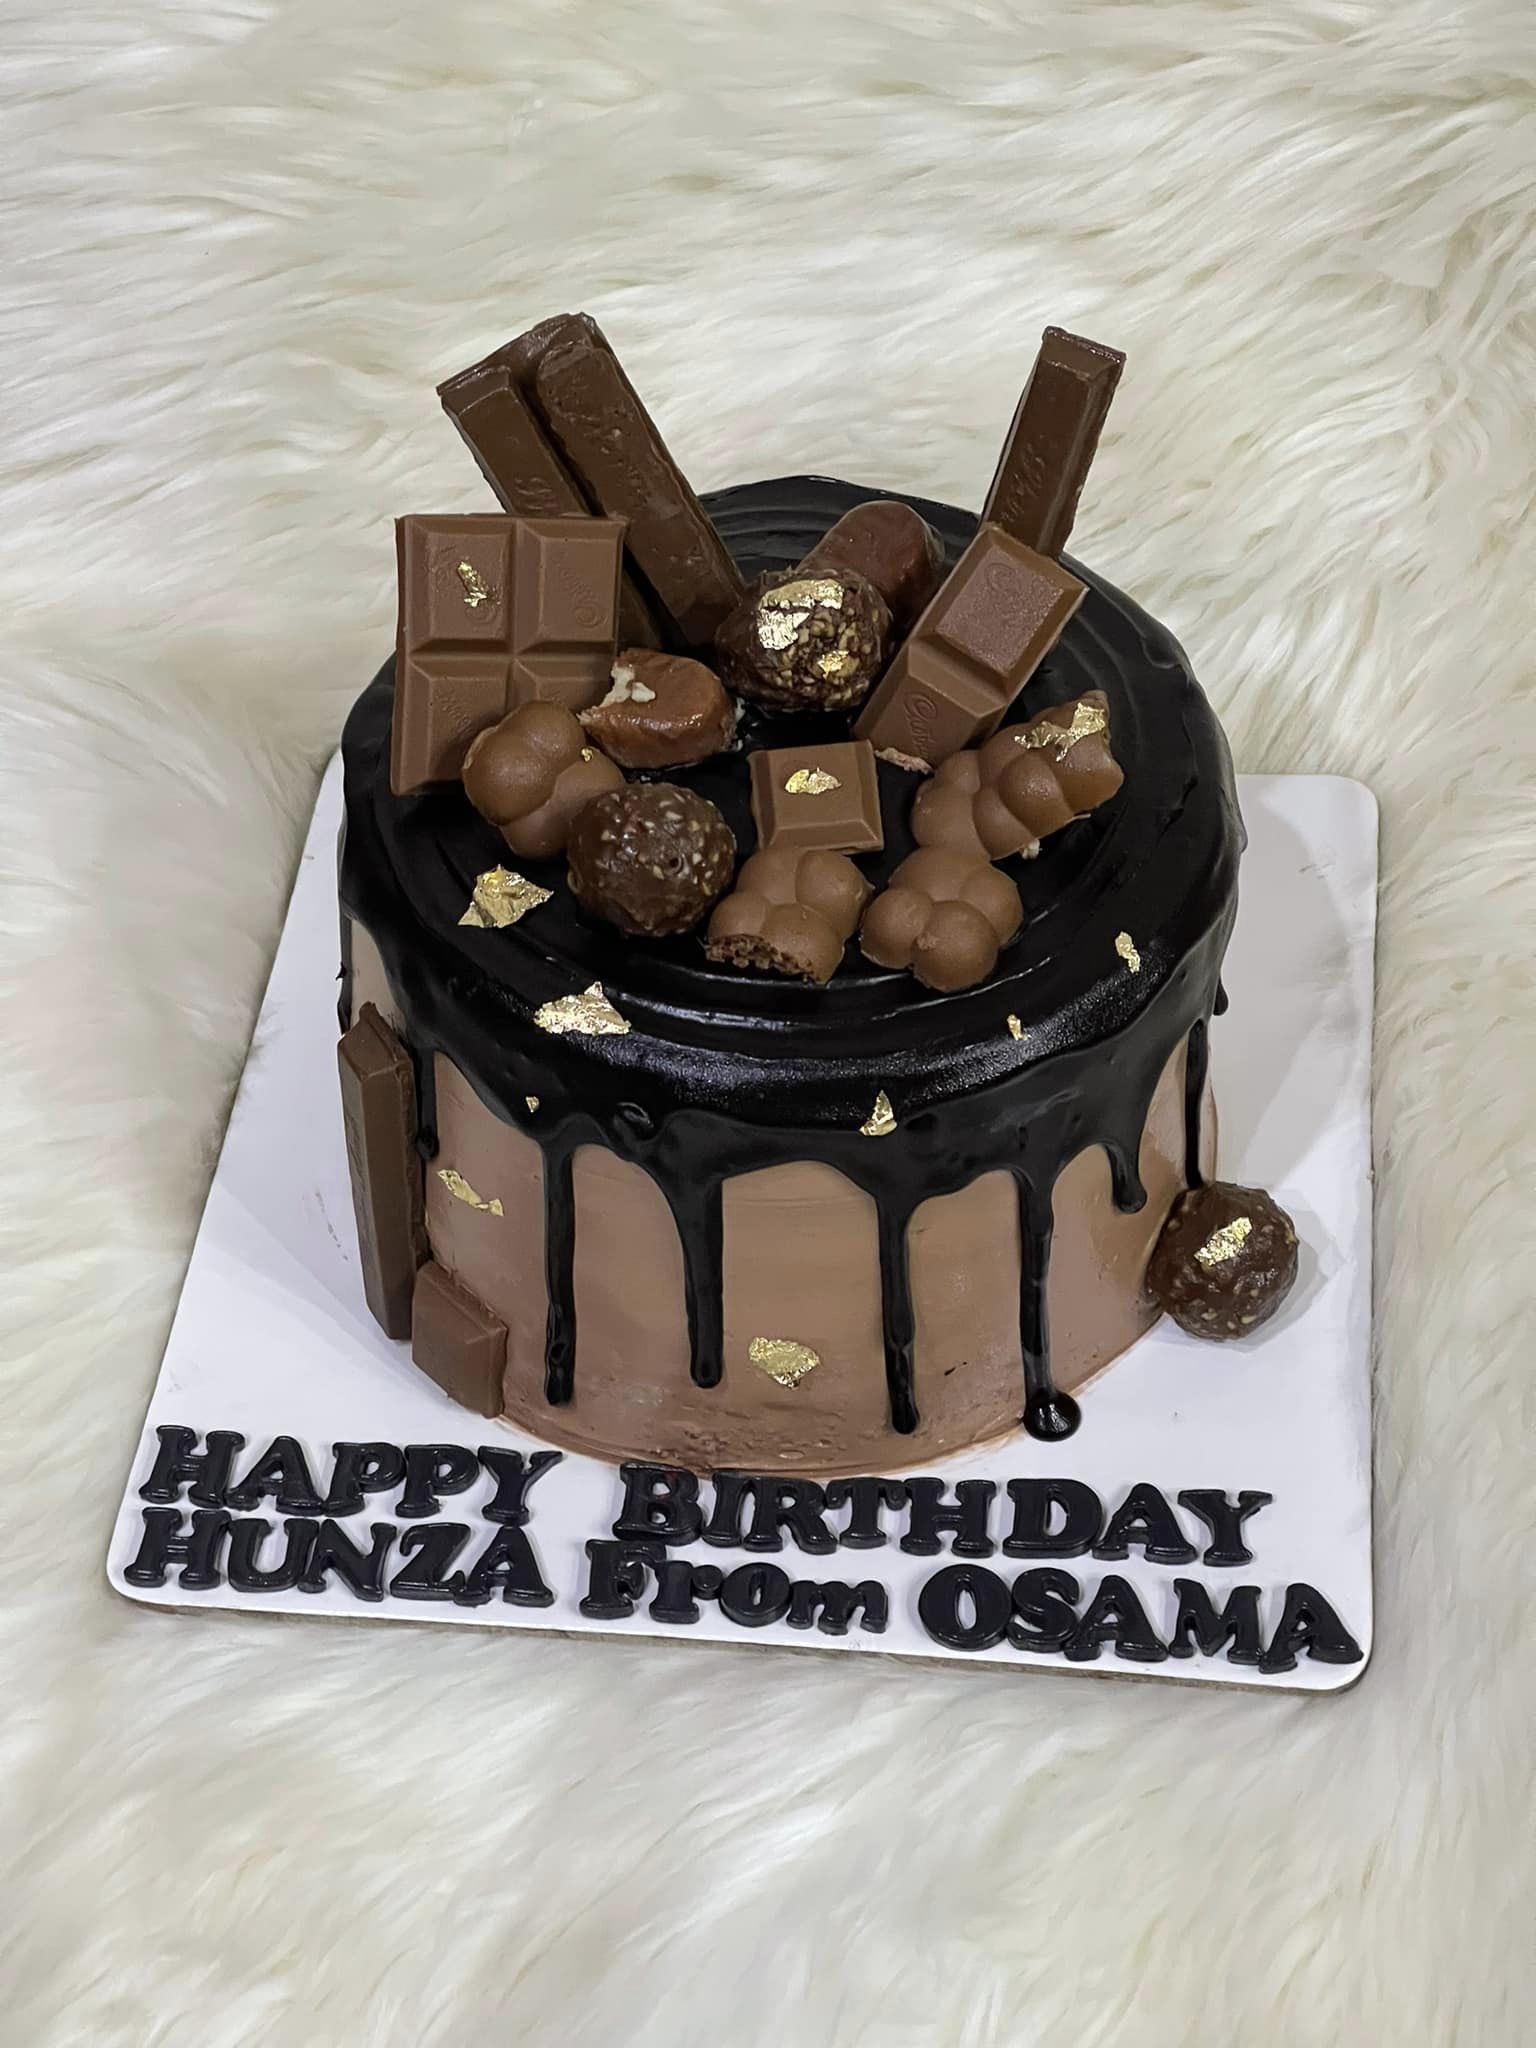 Customized chocolate cake